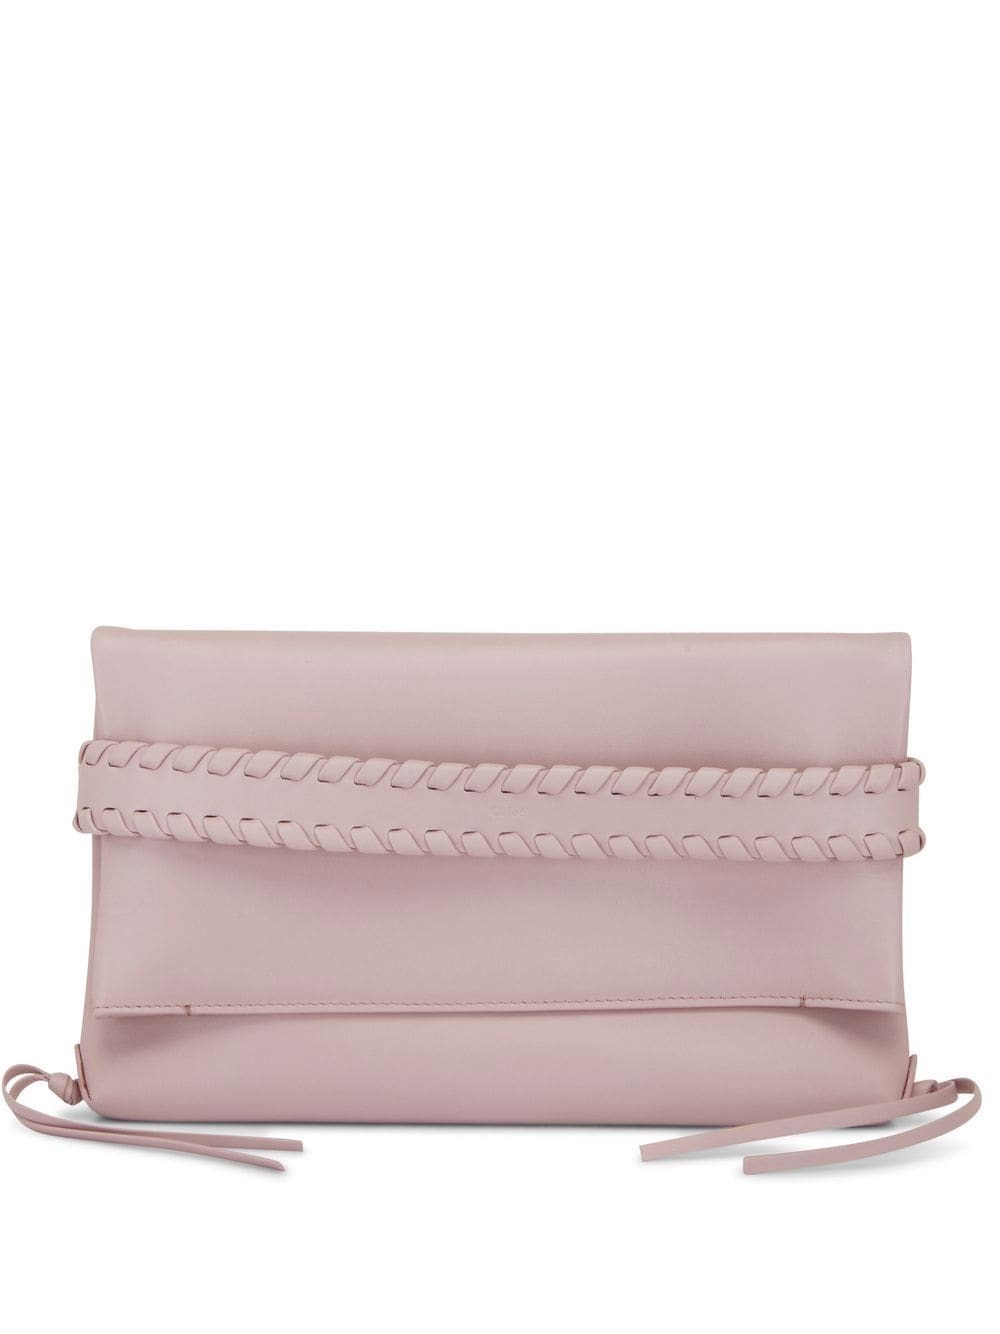 Chloé Chloé Mony clutch bag - Pink